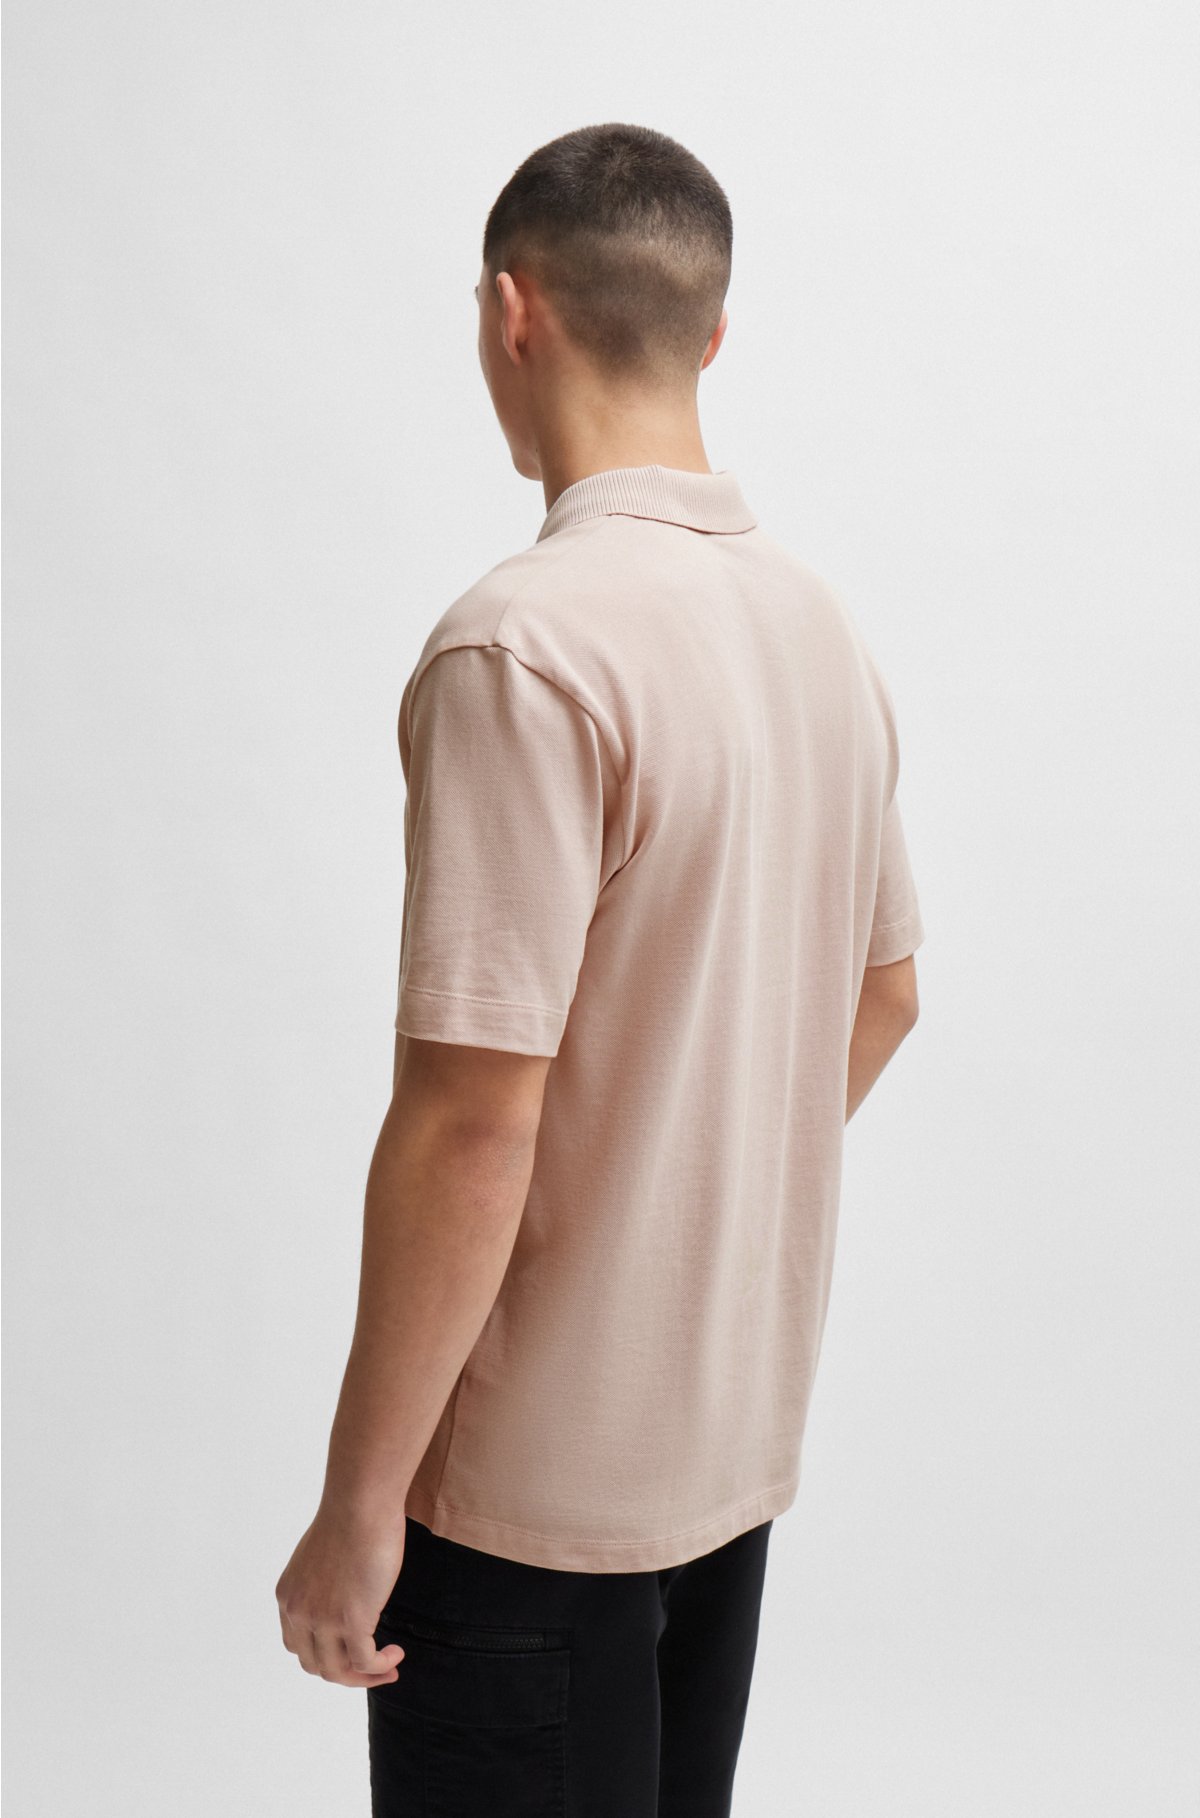 Cotton-piqué polo shirt with logo print, light pink